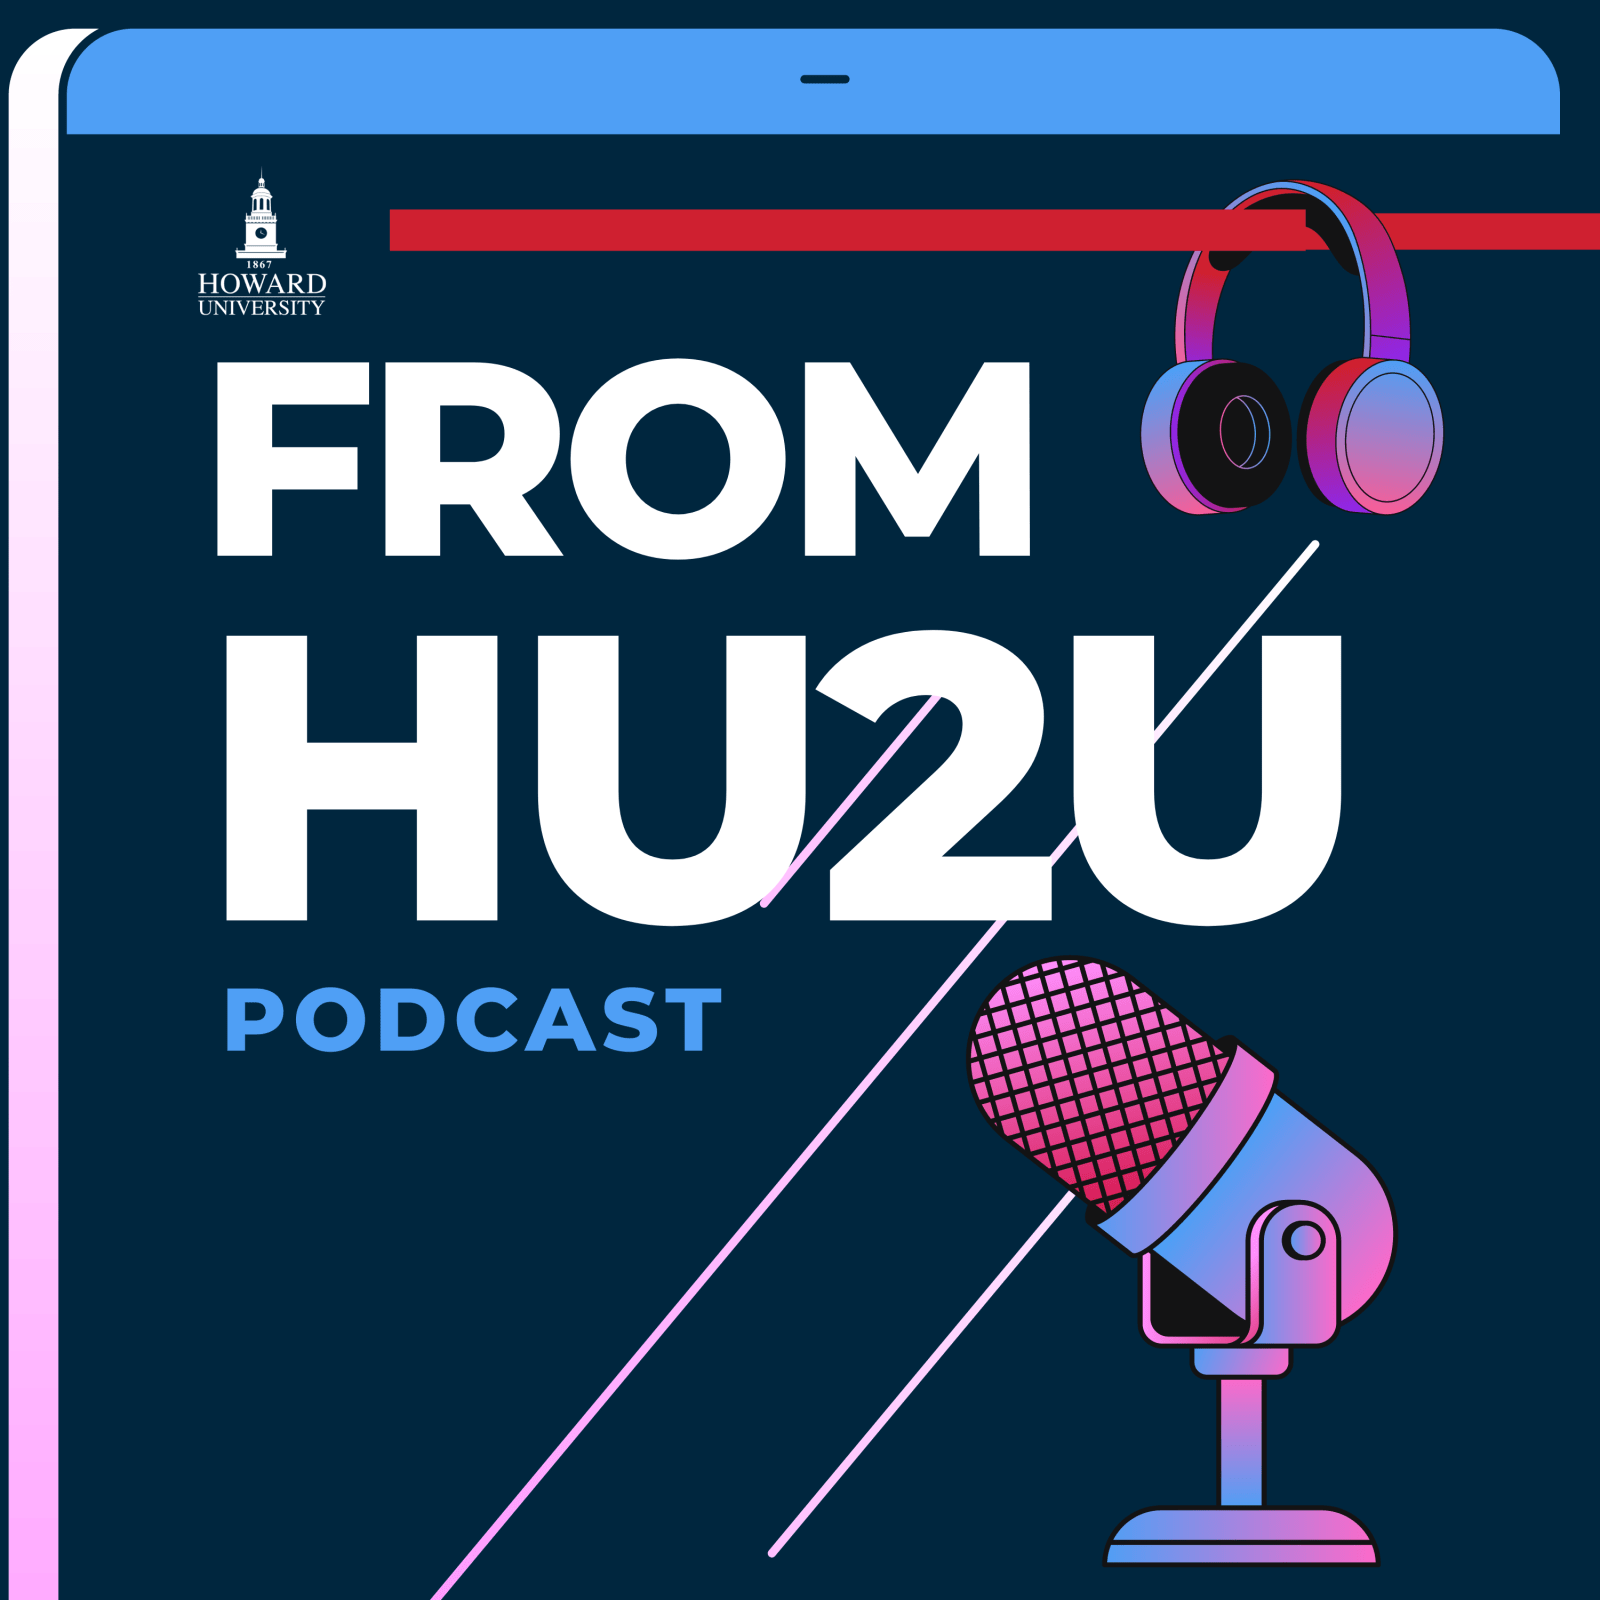 From HU2U podcast graphic